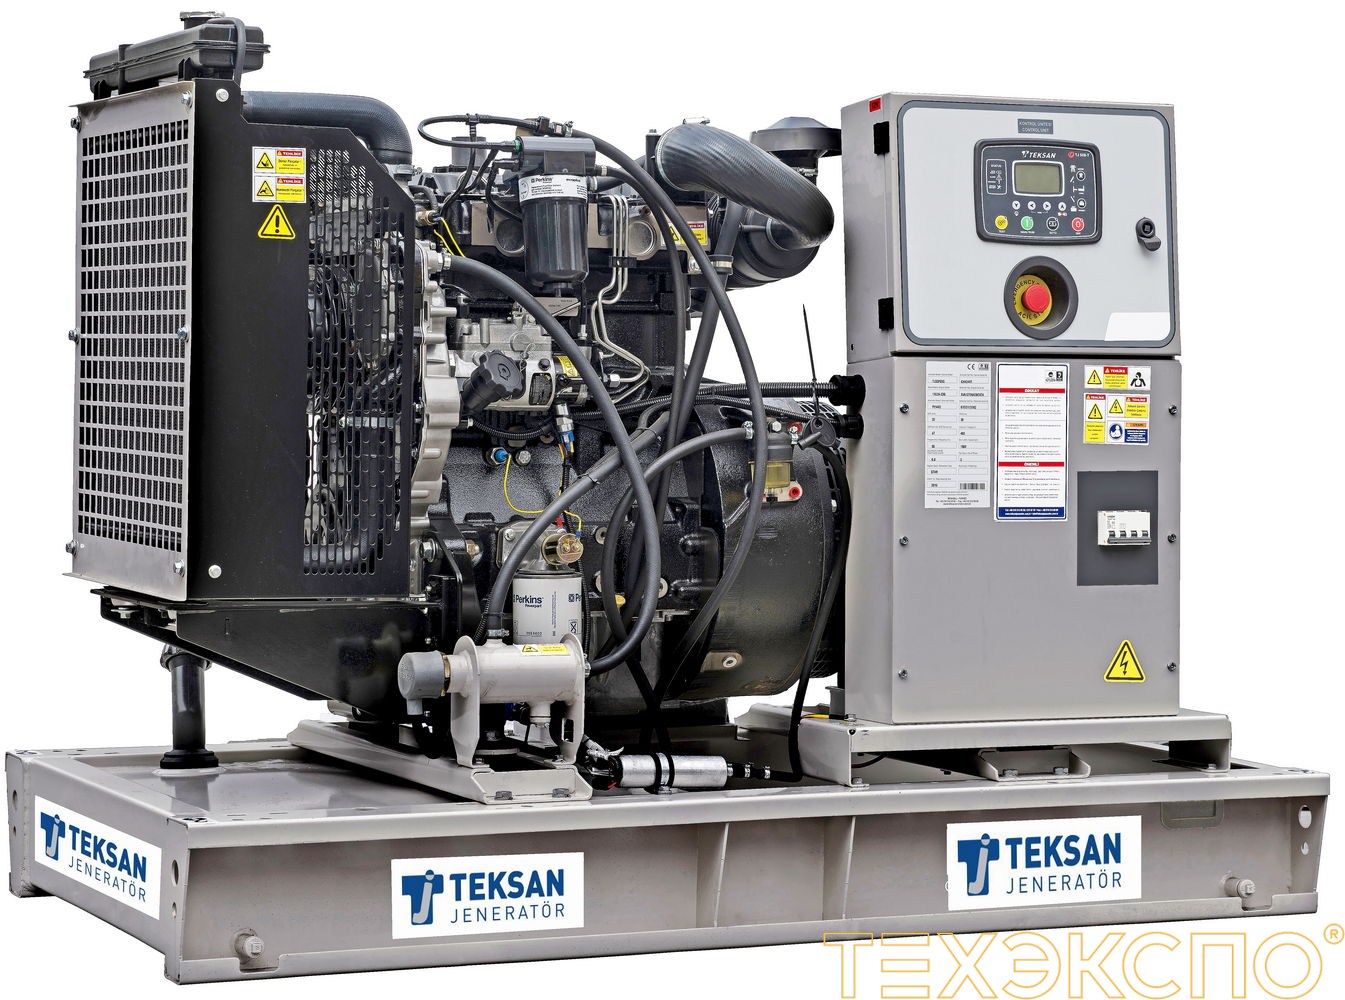 Teksan TJ22PE5A - ДЭС 16 кВт в Санкт-Петербурге за 881 659 рублей | Дизельная электростанция в Техэкспо